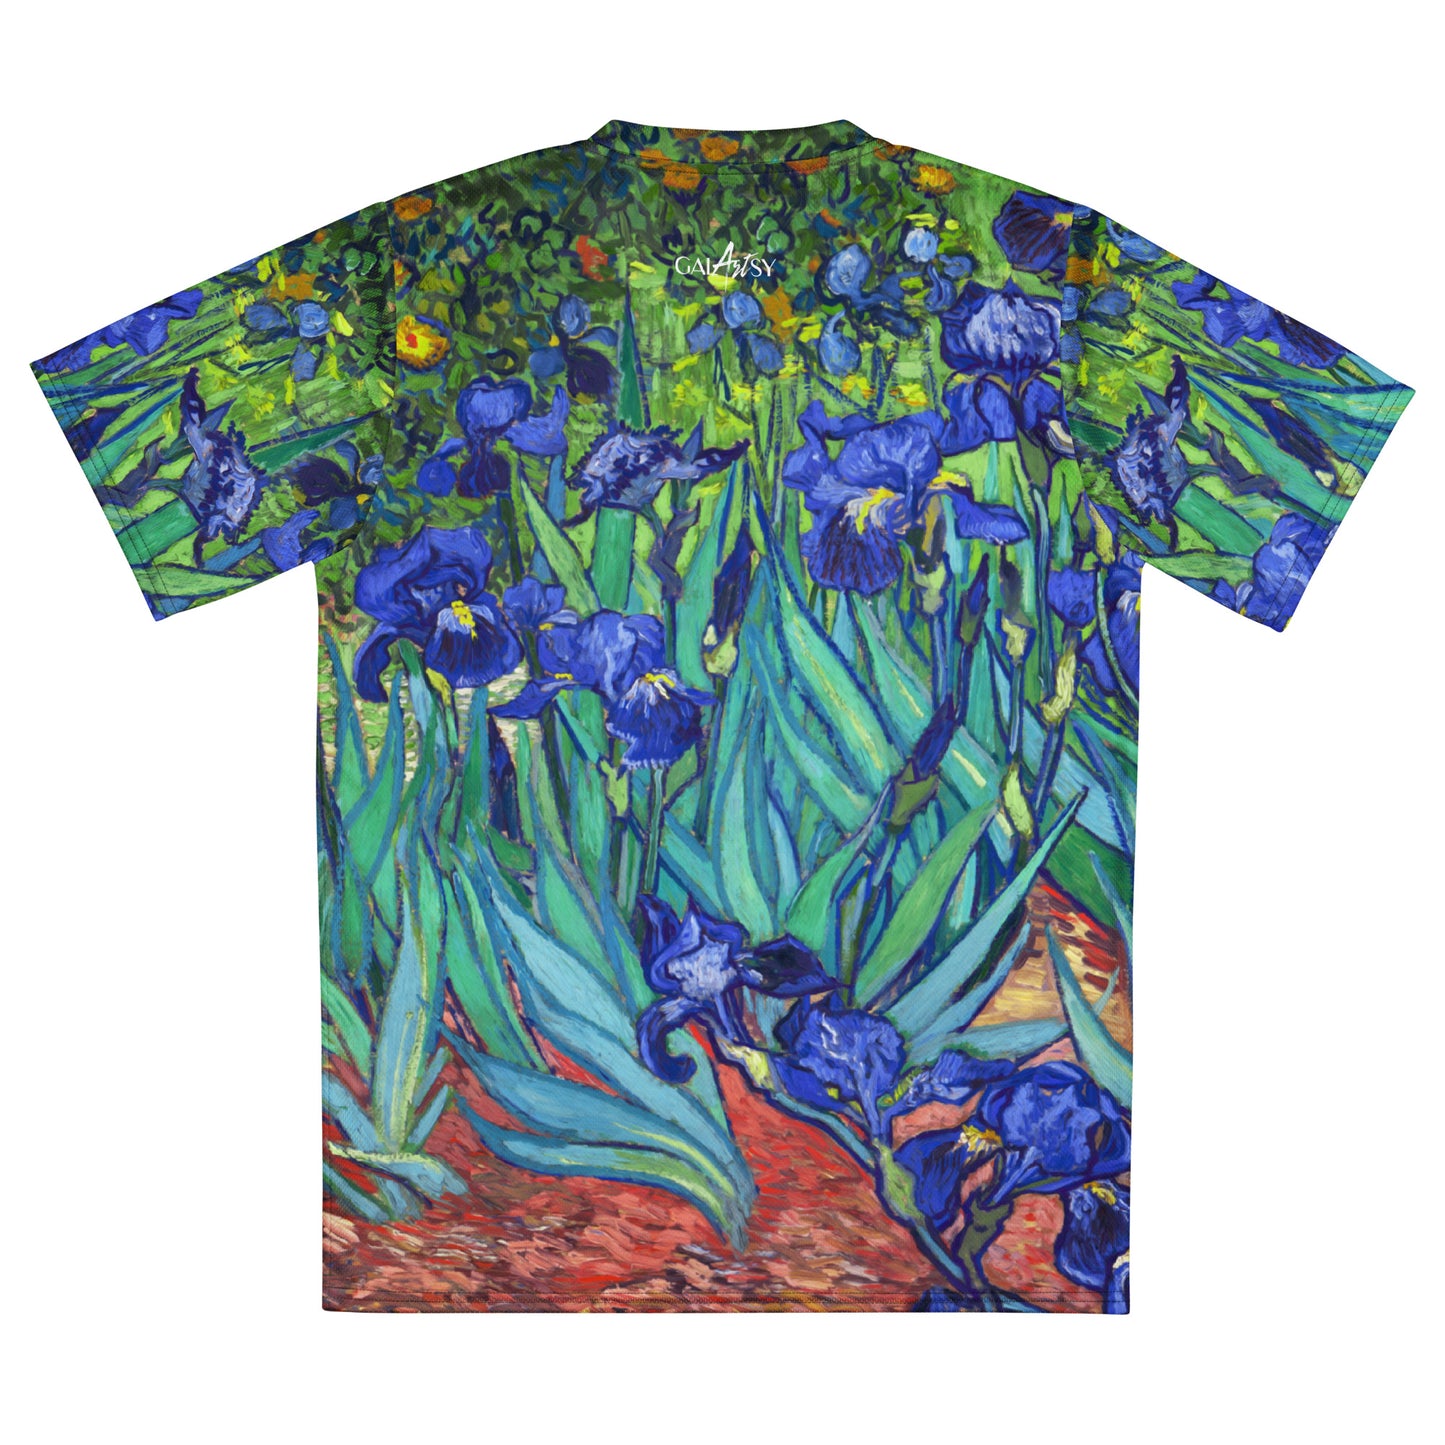 Van Gogh Irises unisex sports jersey